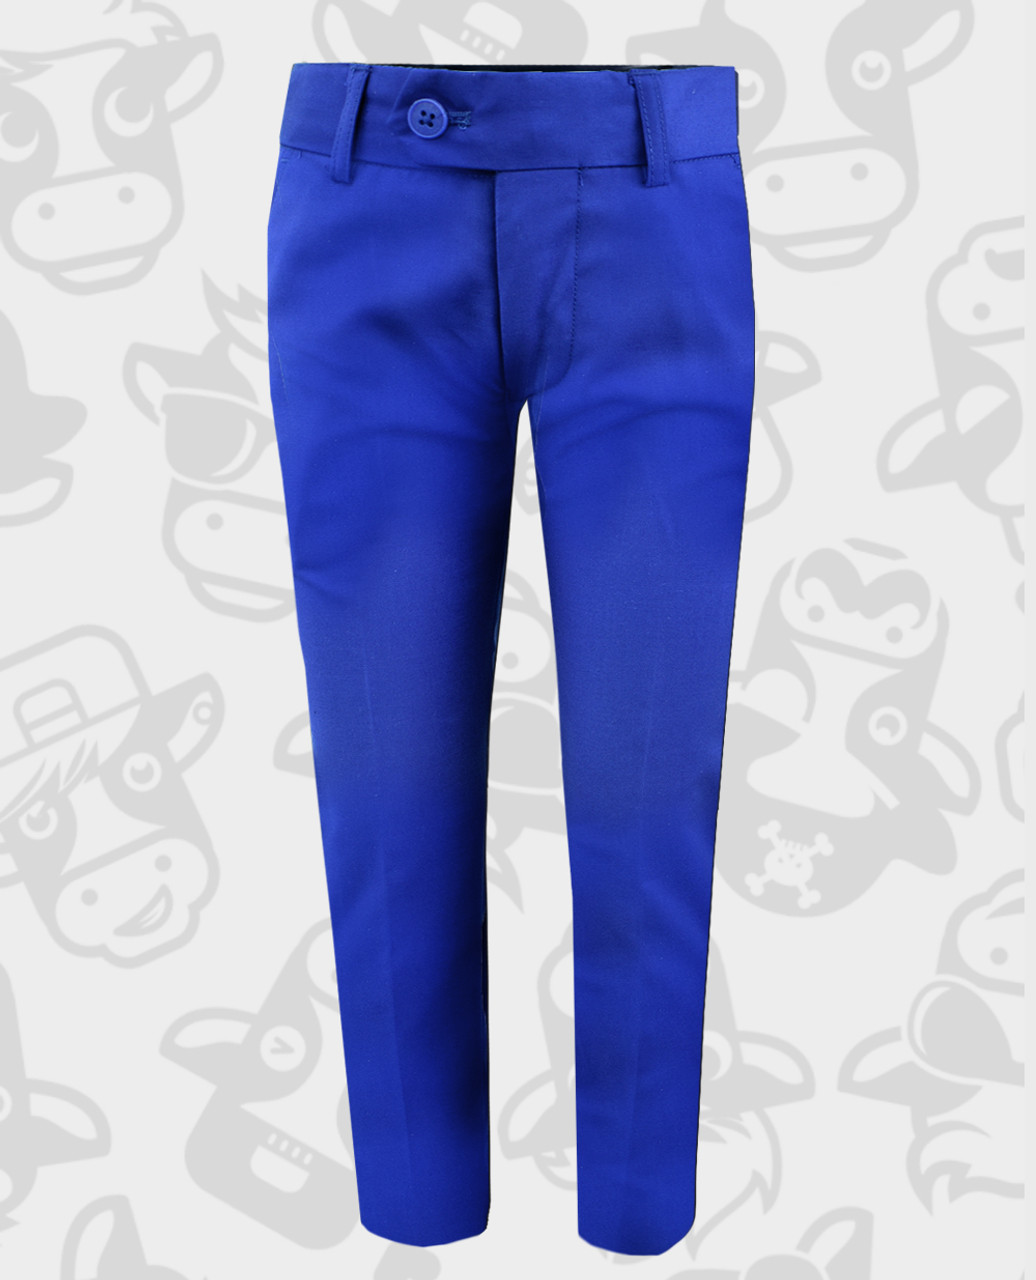 Wide-leg Dress Pants - Bright blue - Ladies